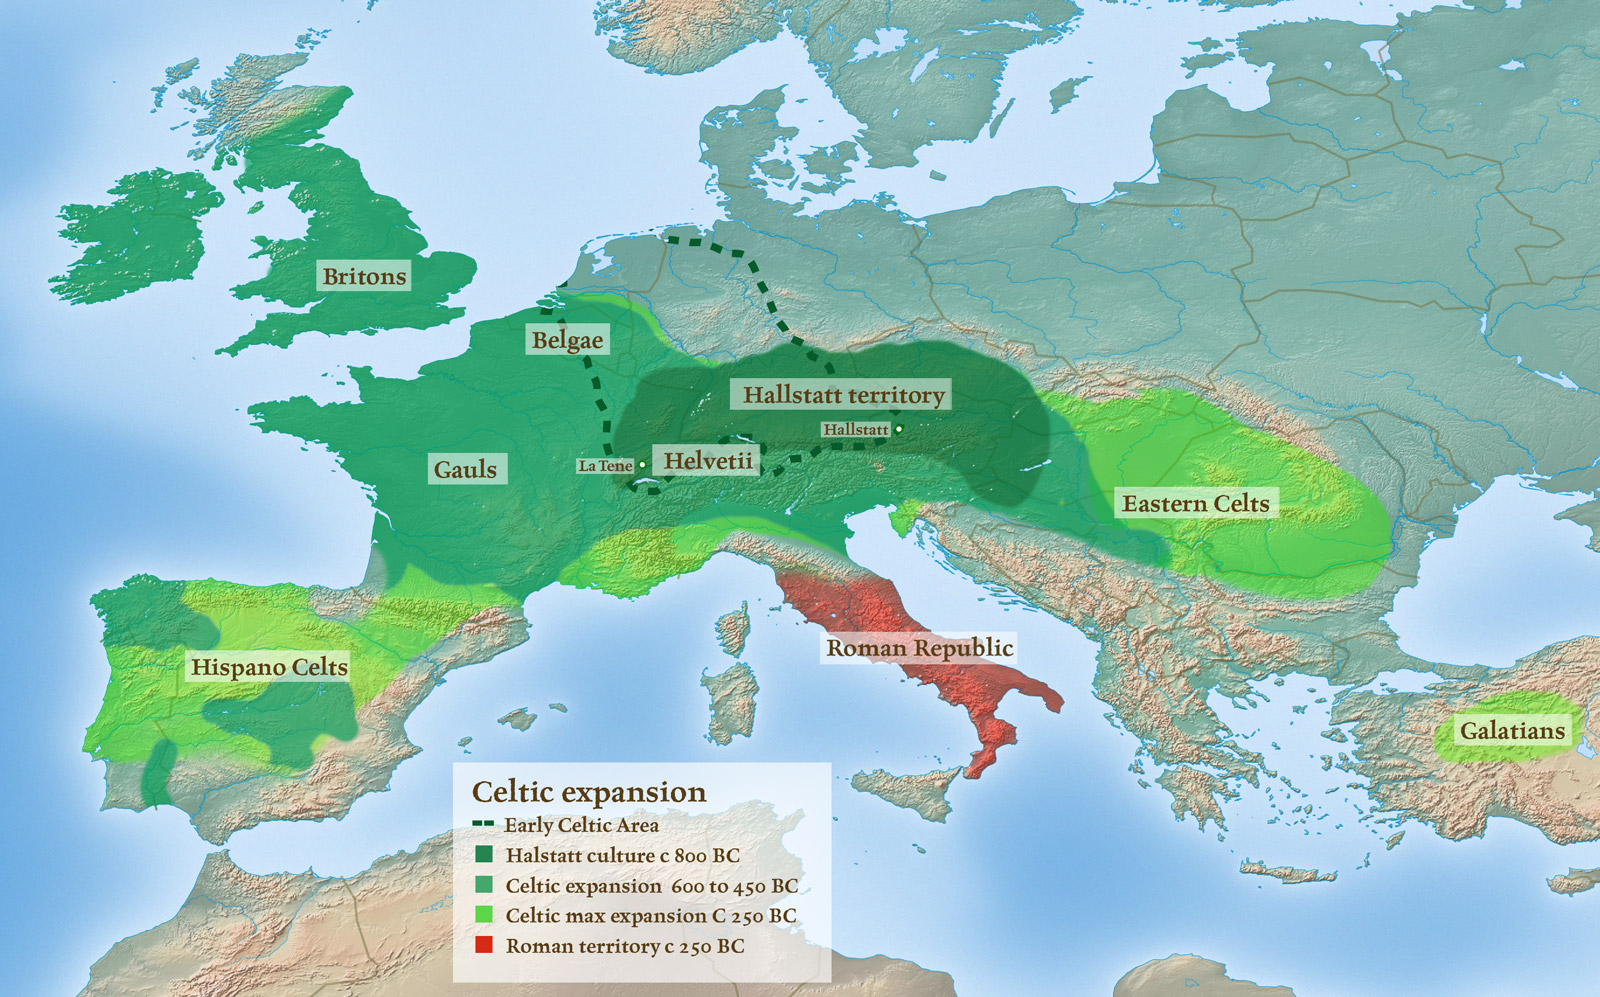 17-Celtic-Expansion-3rd-century-BC